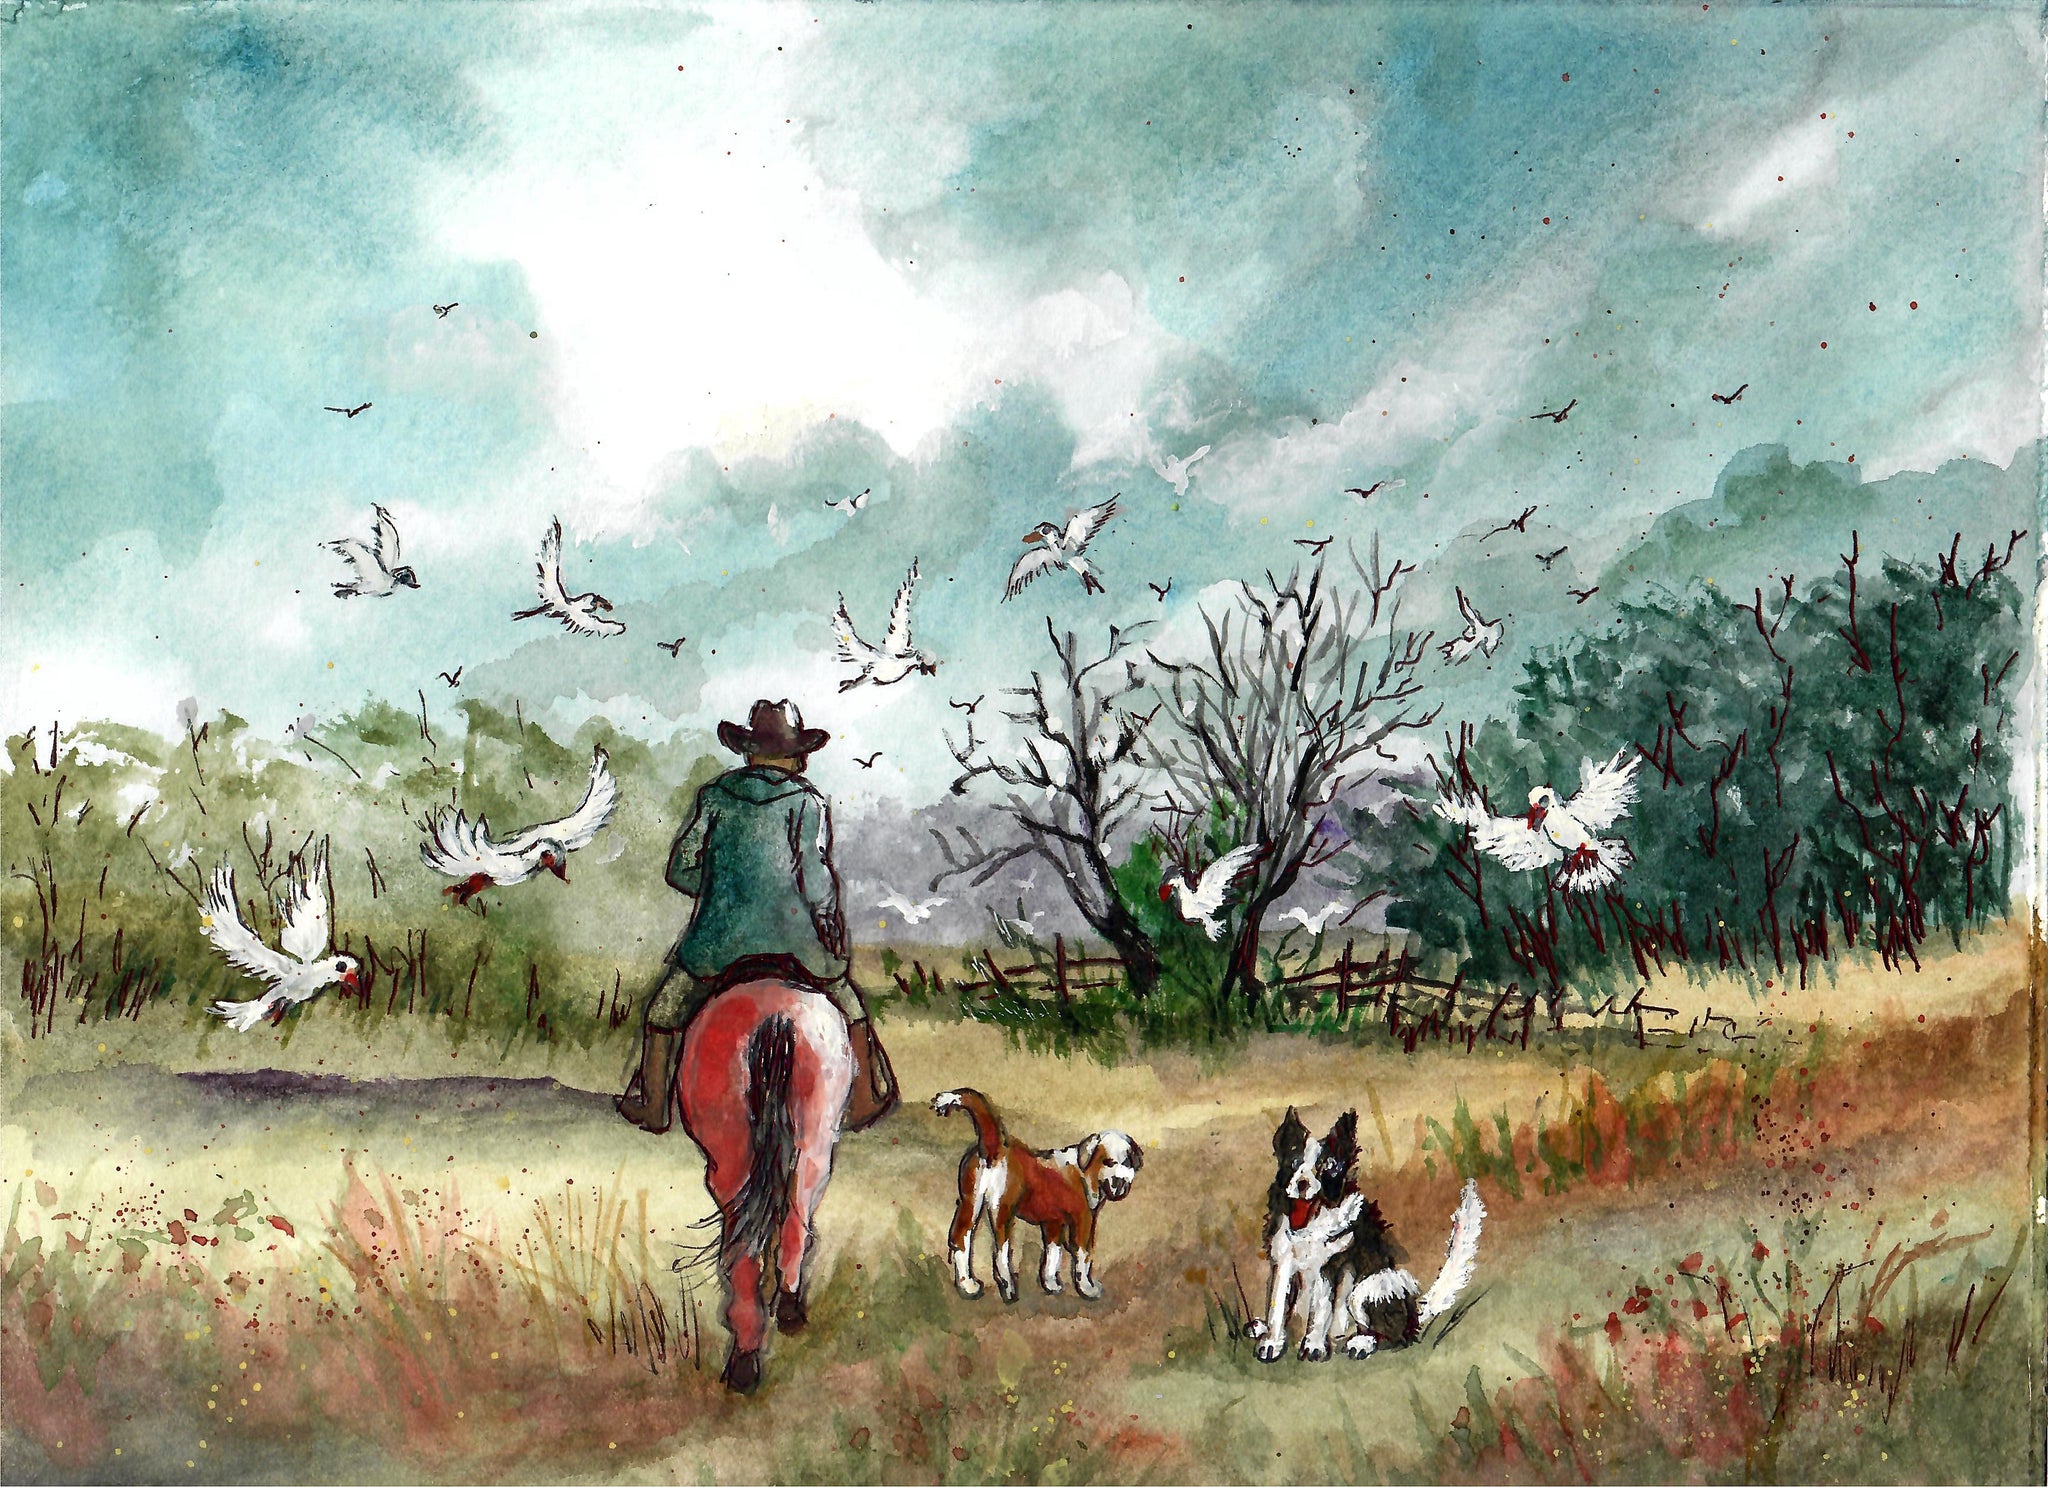 Western - Cowboy, Horse, Dogs And White Birds In Autumn, Cowboy Art Print, Cowboy Wall Decor